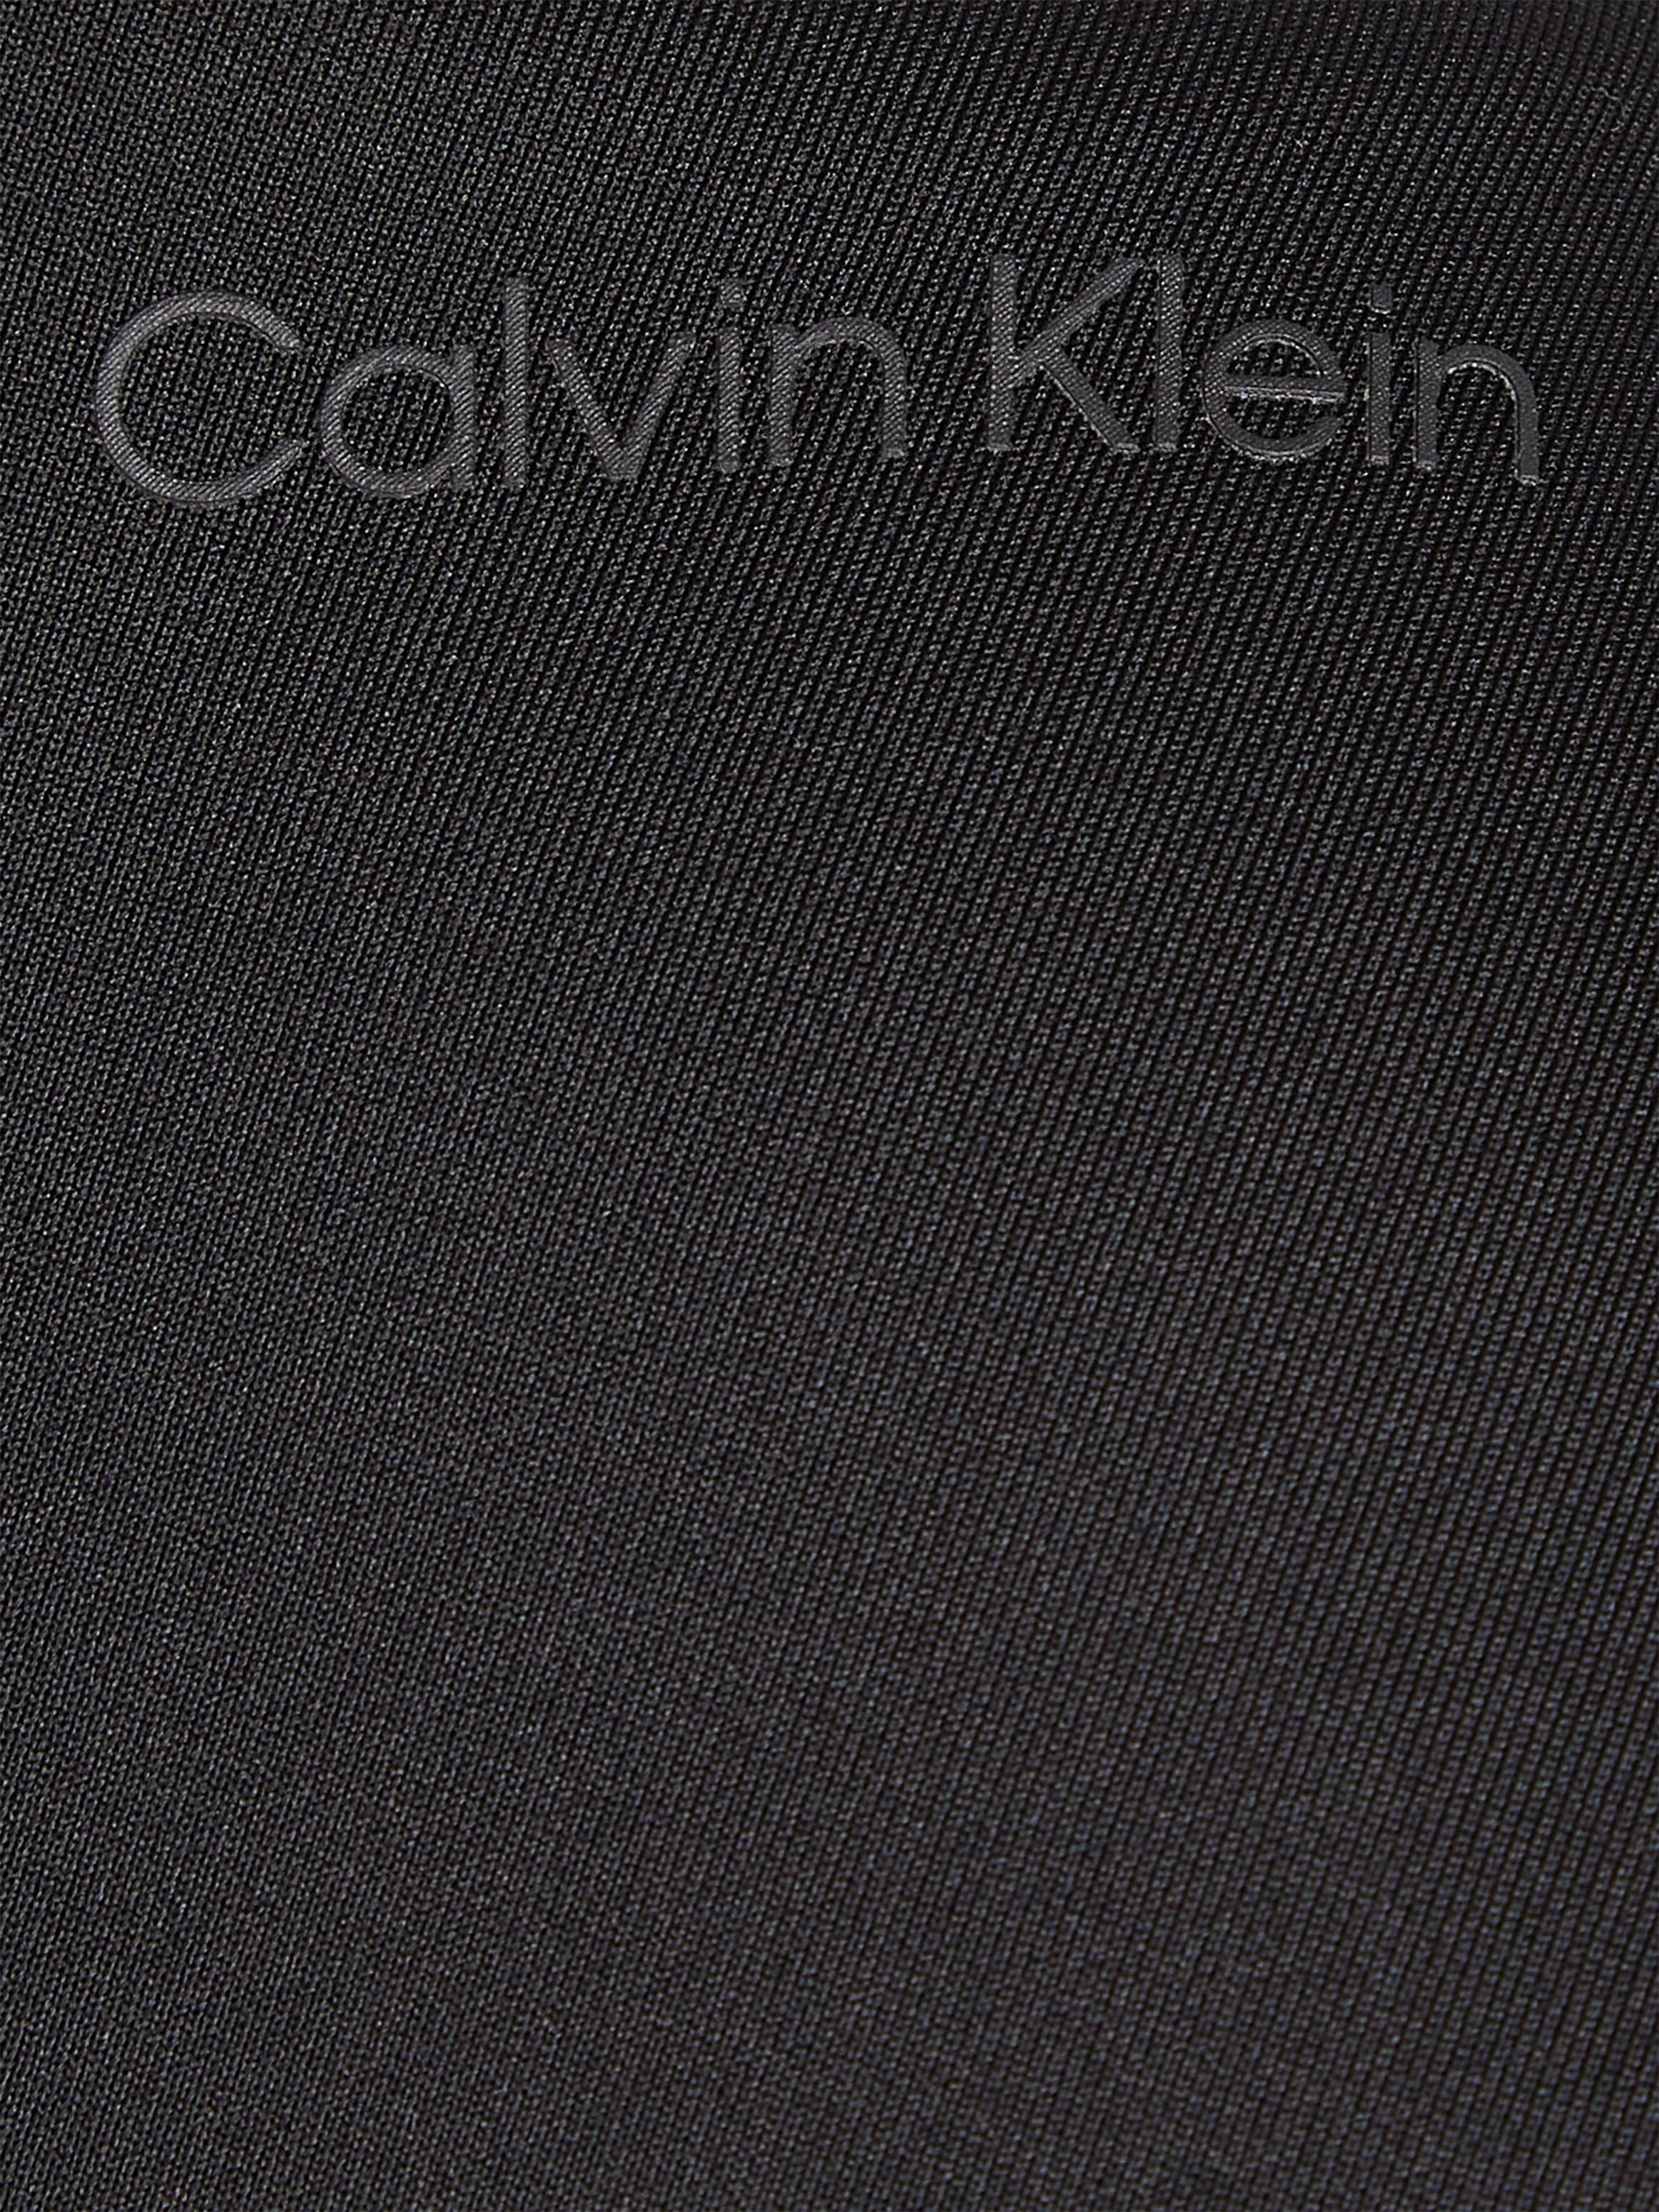 MINI Klein KNIT Etuikleid kaufen Calvin DRESS« »TECHNICAL BAUR | TANK